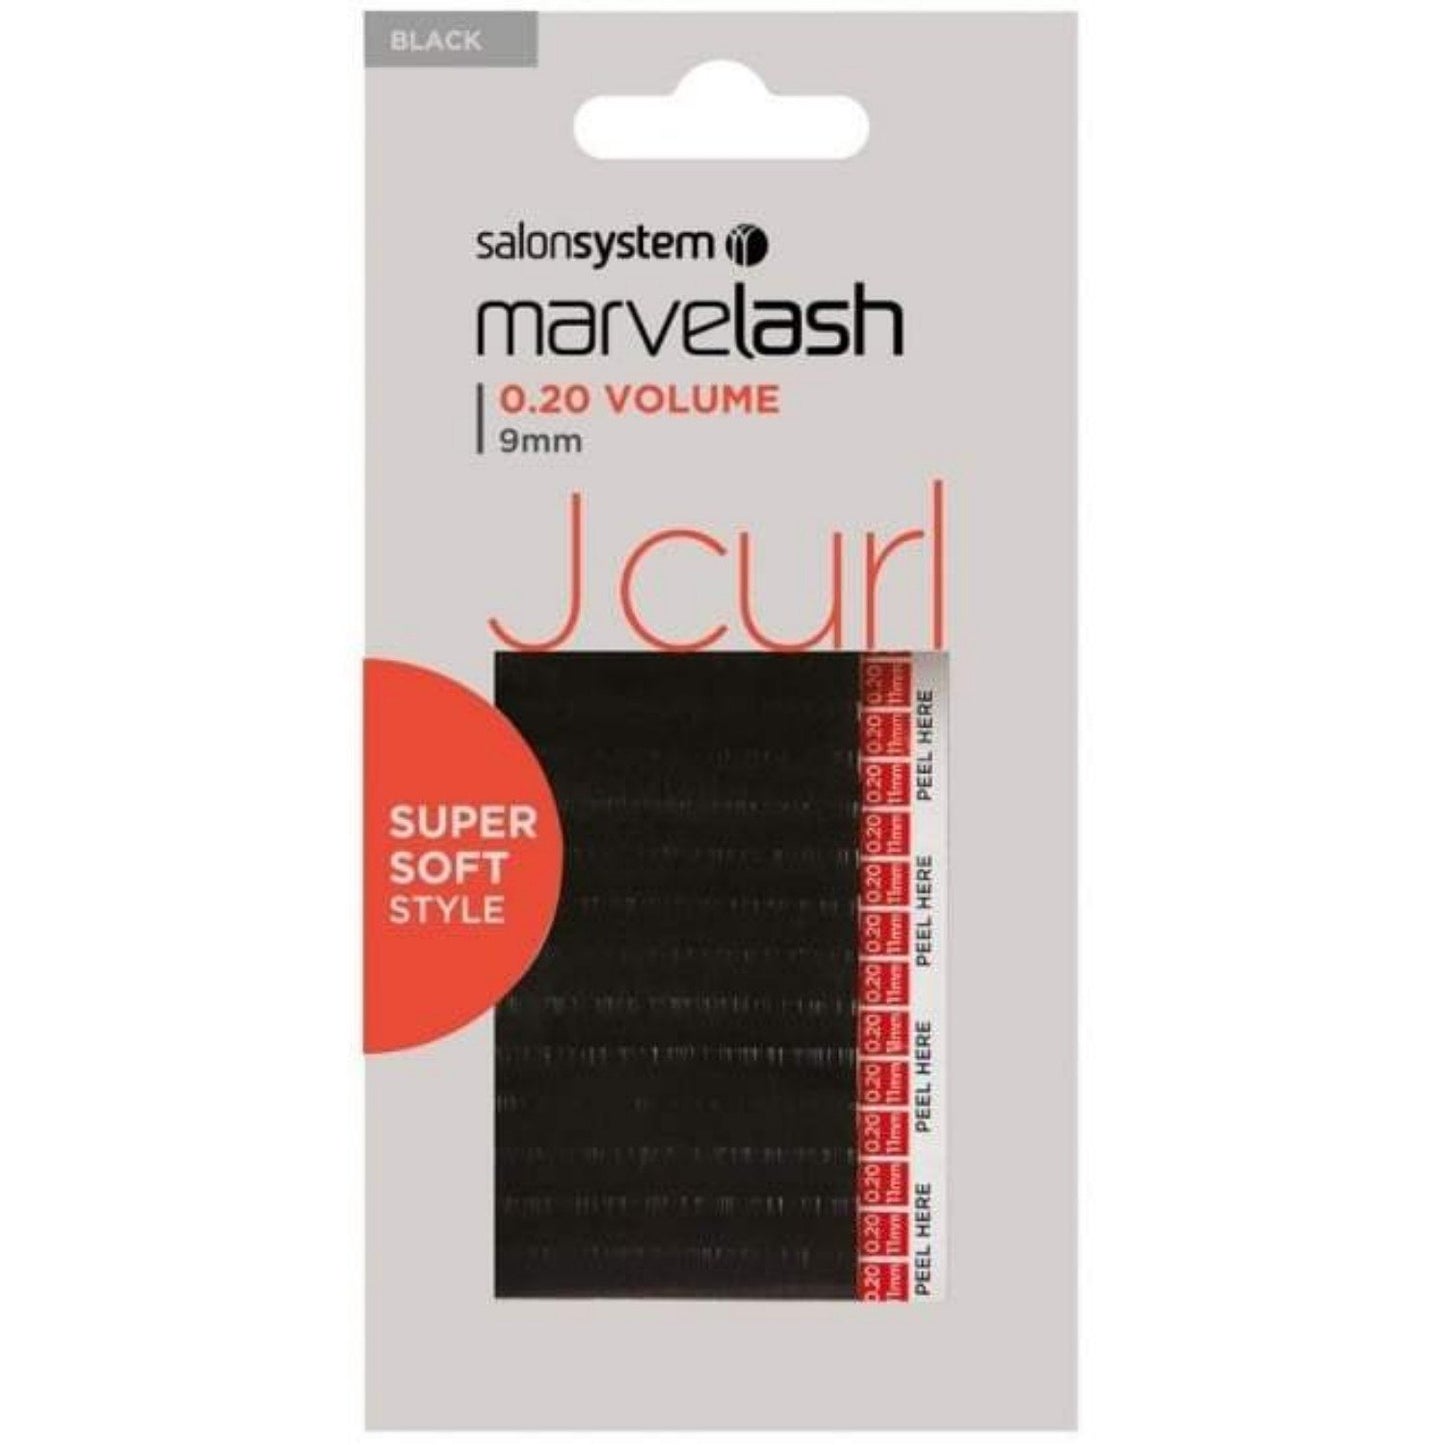 Salon System Marvelash J Curl 0.20 9mm J Curl (Super Soft Style) (SHOP)